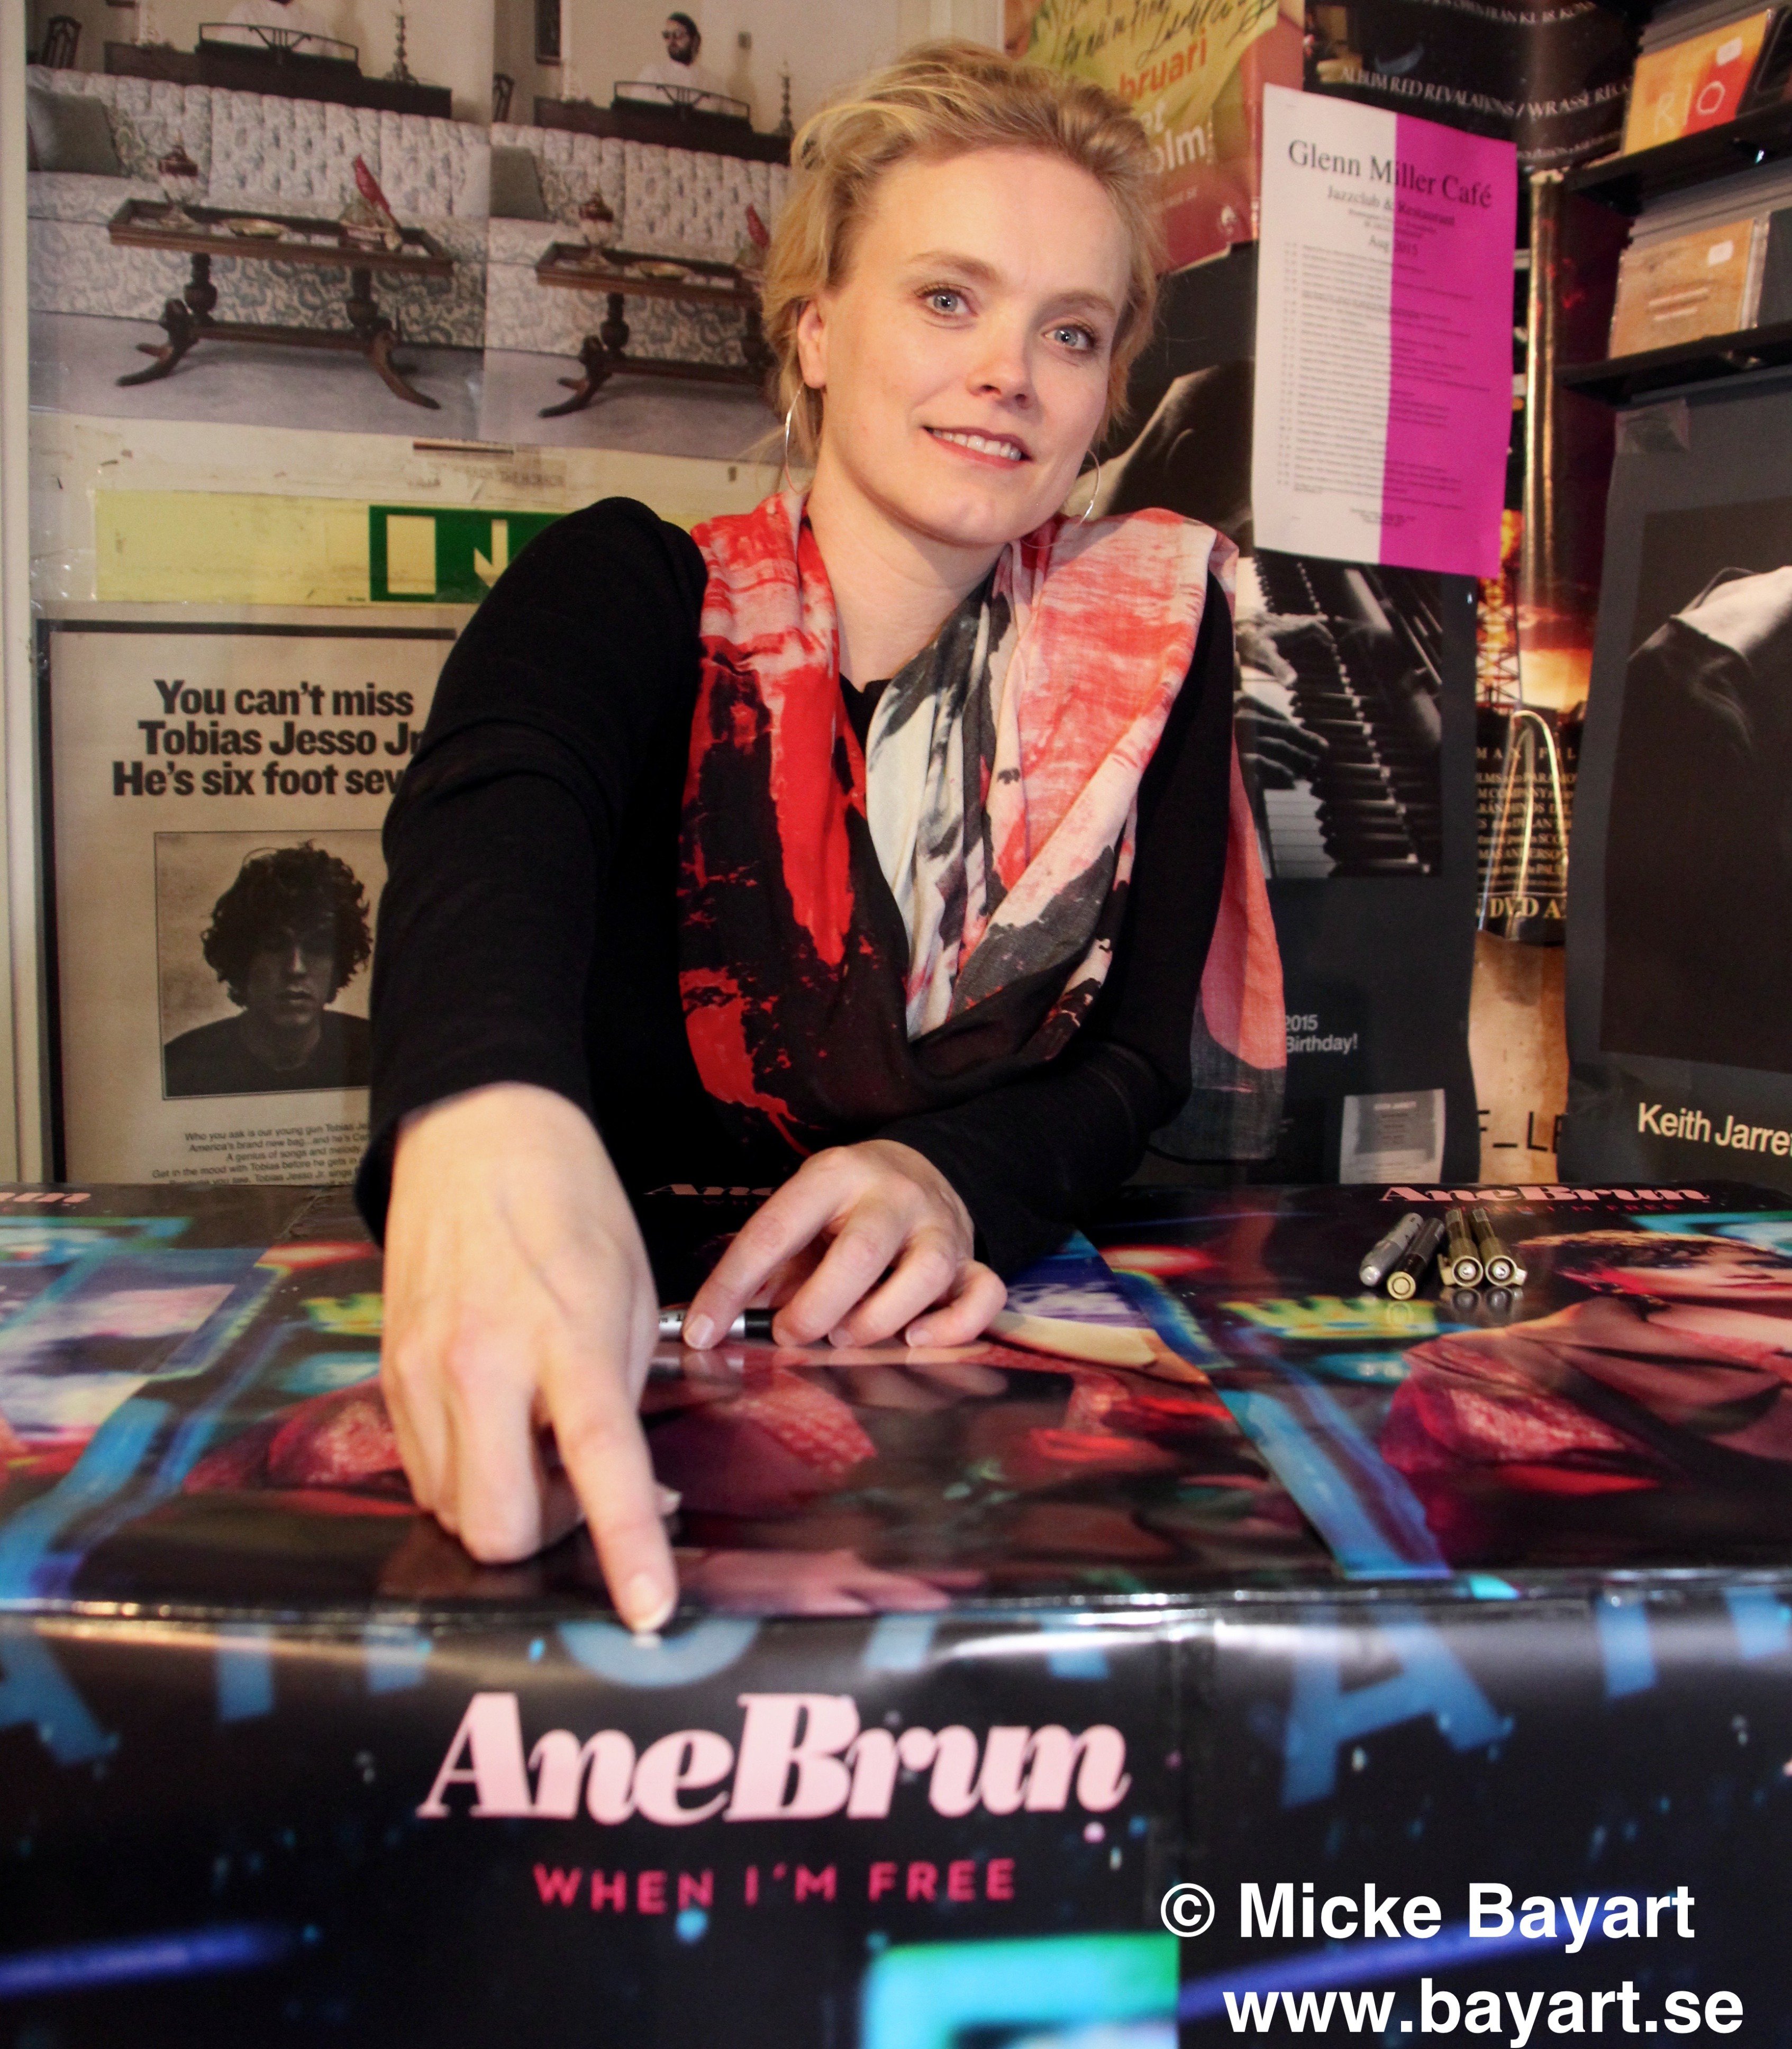 Ane Brun, 2015.